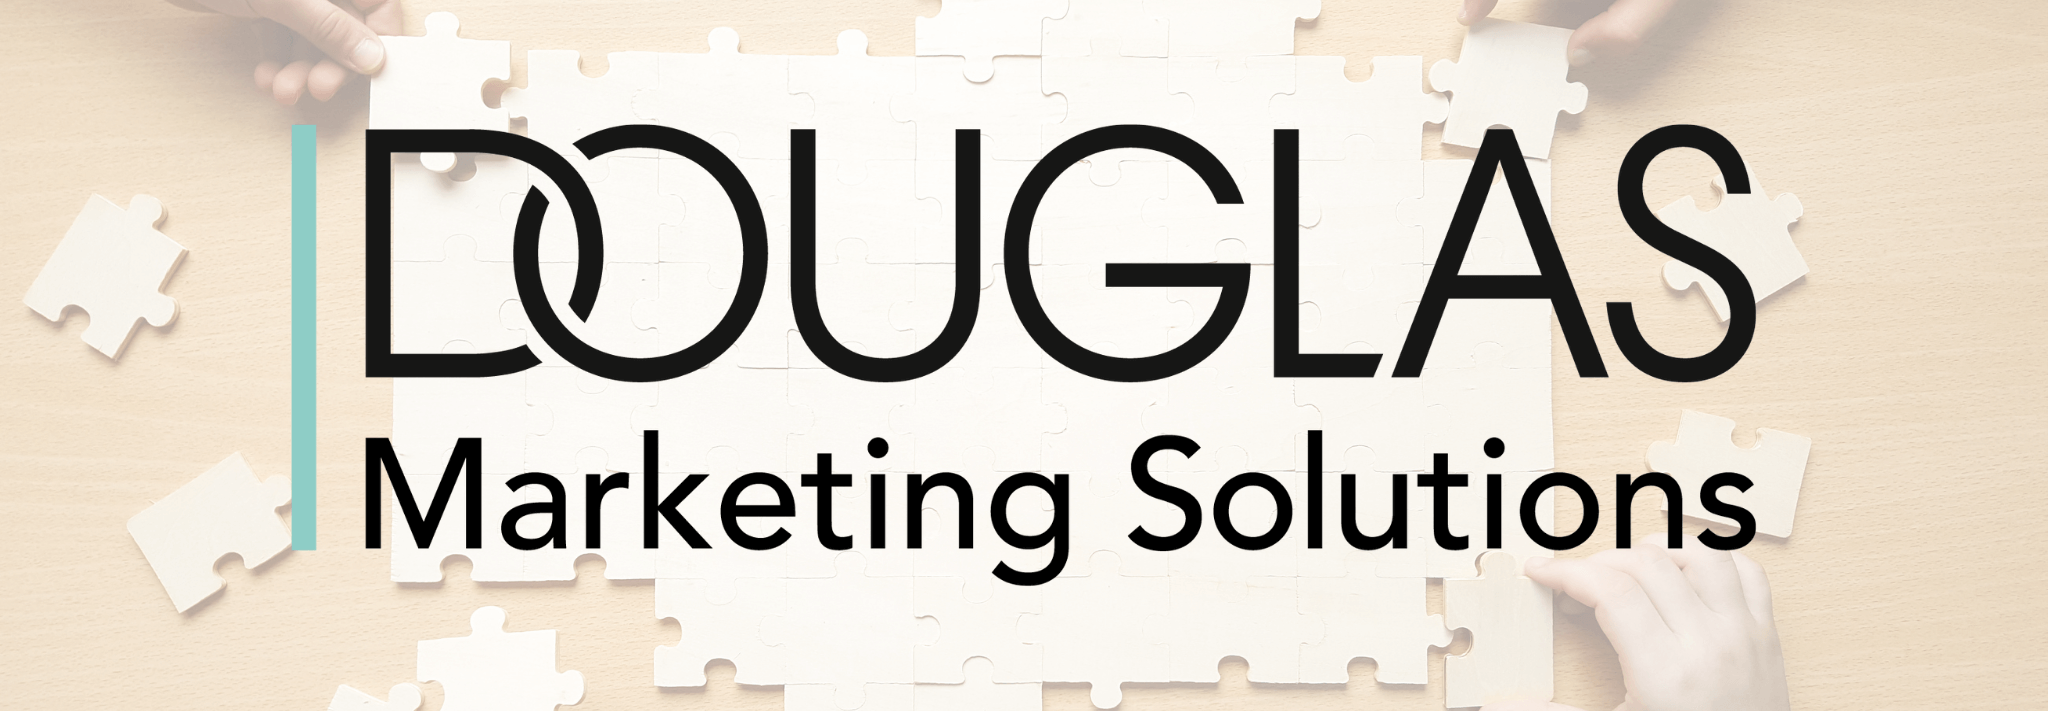 Banner Douglas Marketing Solutions